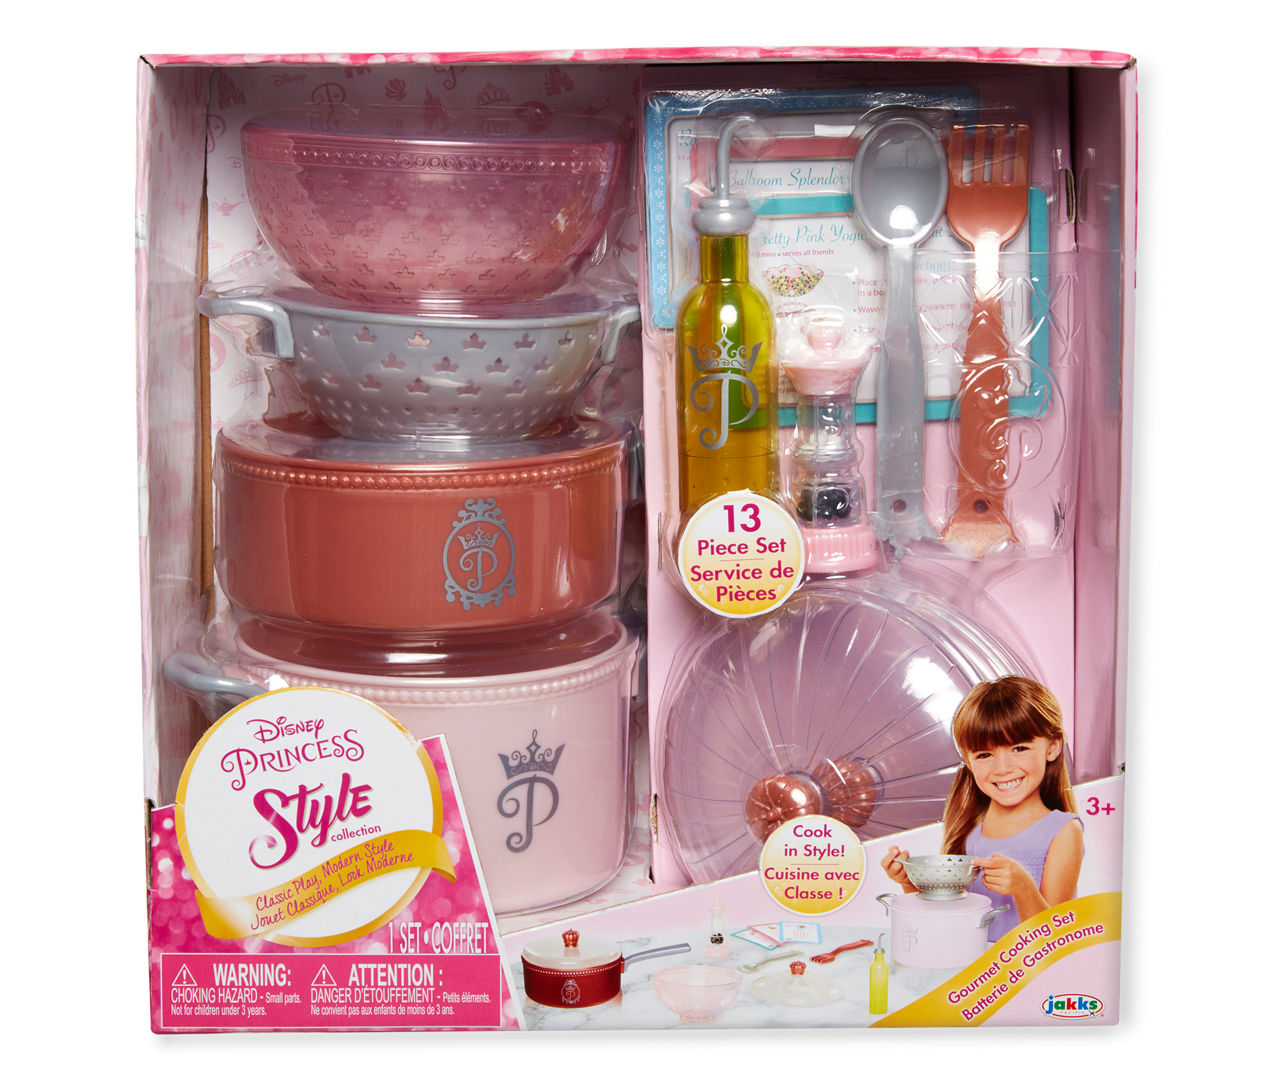 Vol Rang slaaf Disney Princess Style Collection 13-Piece Gourmet Cooking Set | Big Lots